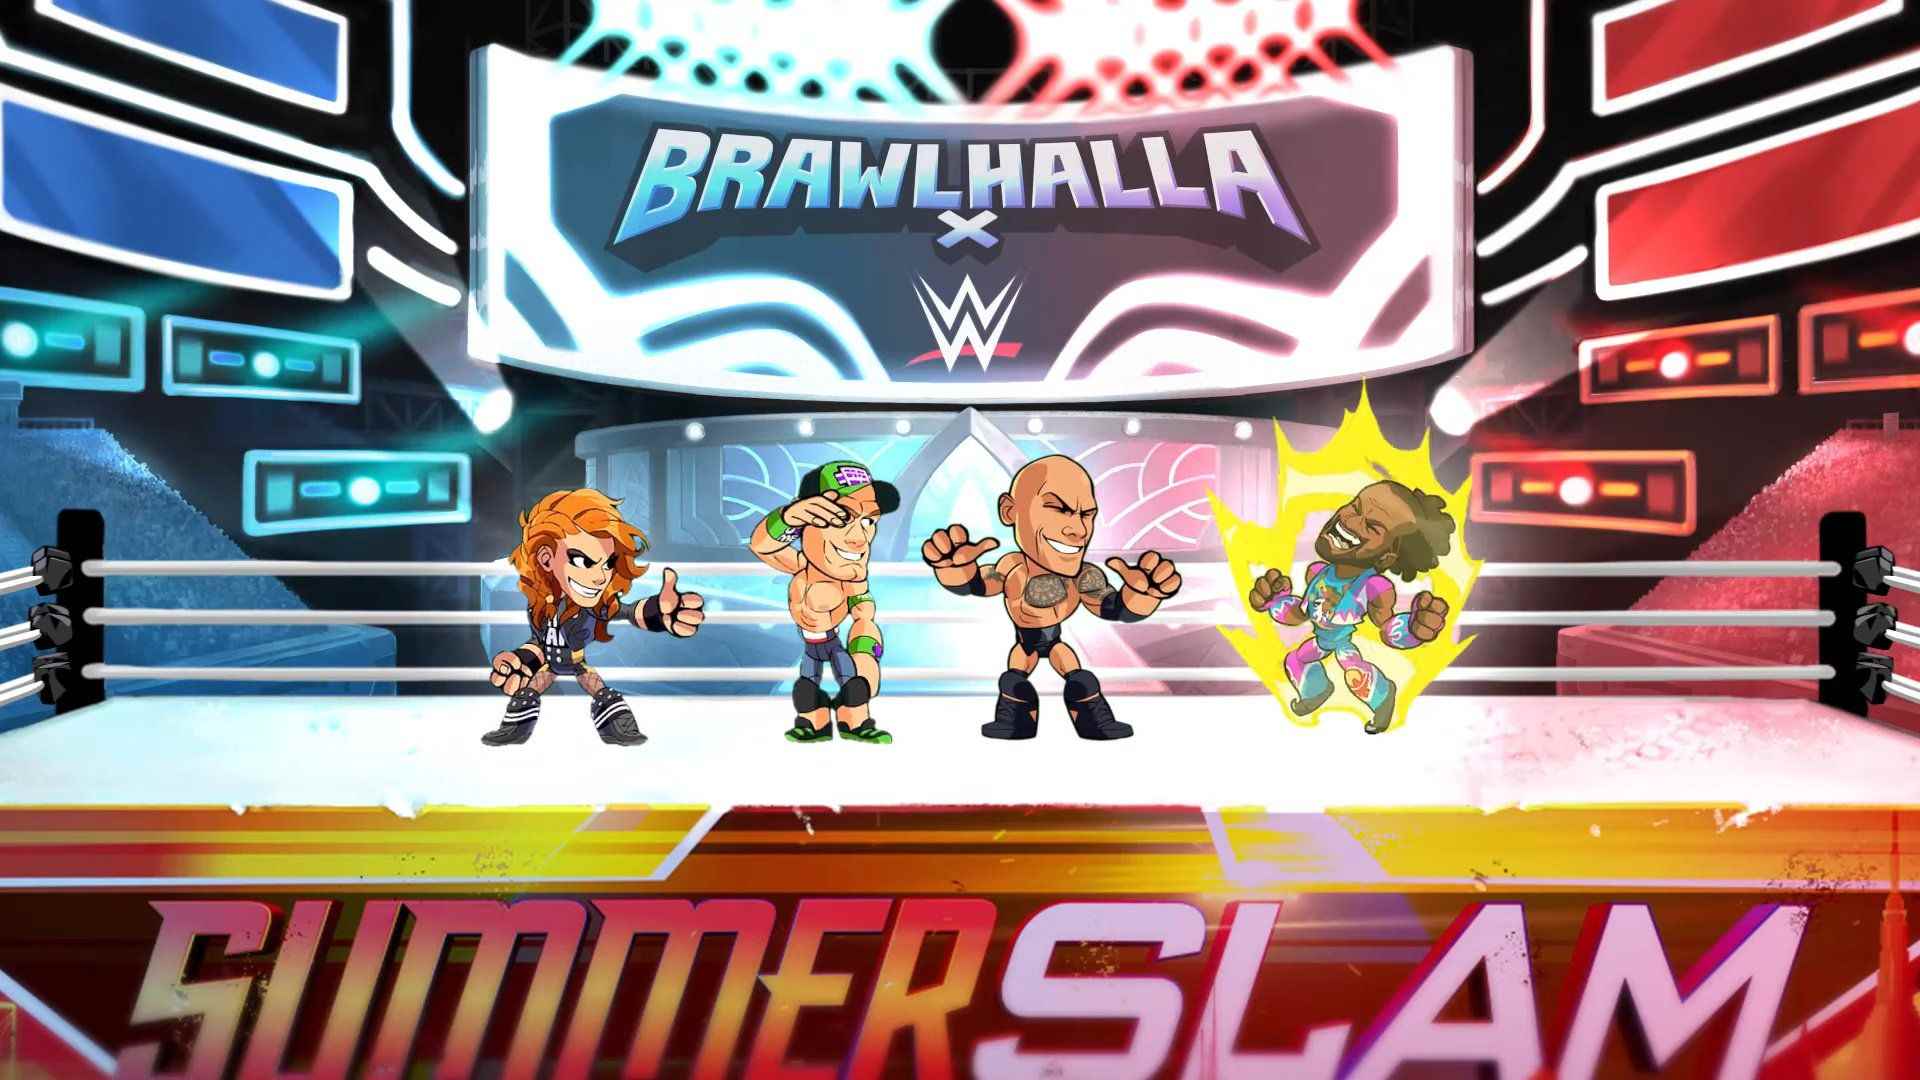 Brawlhalla crossover WWE